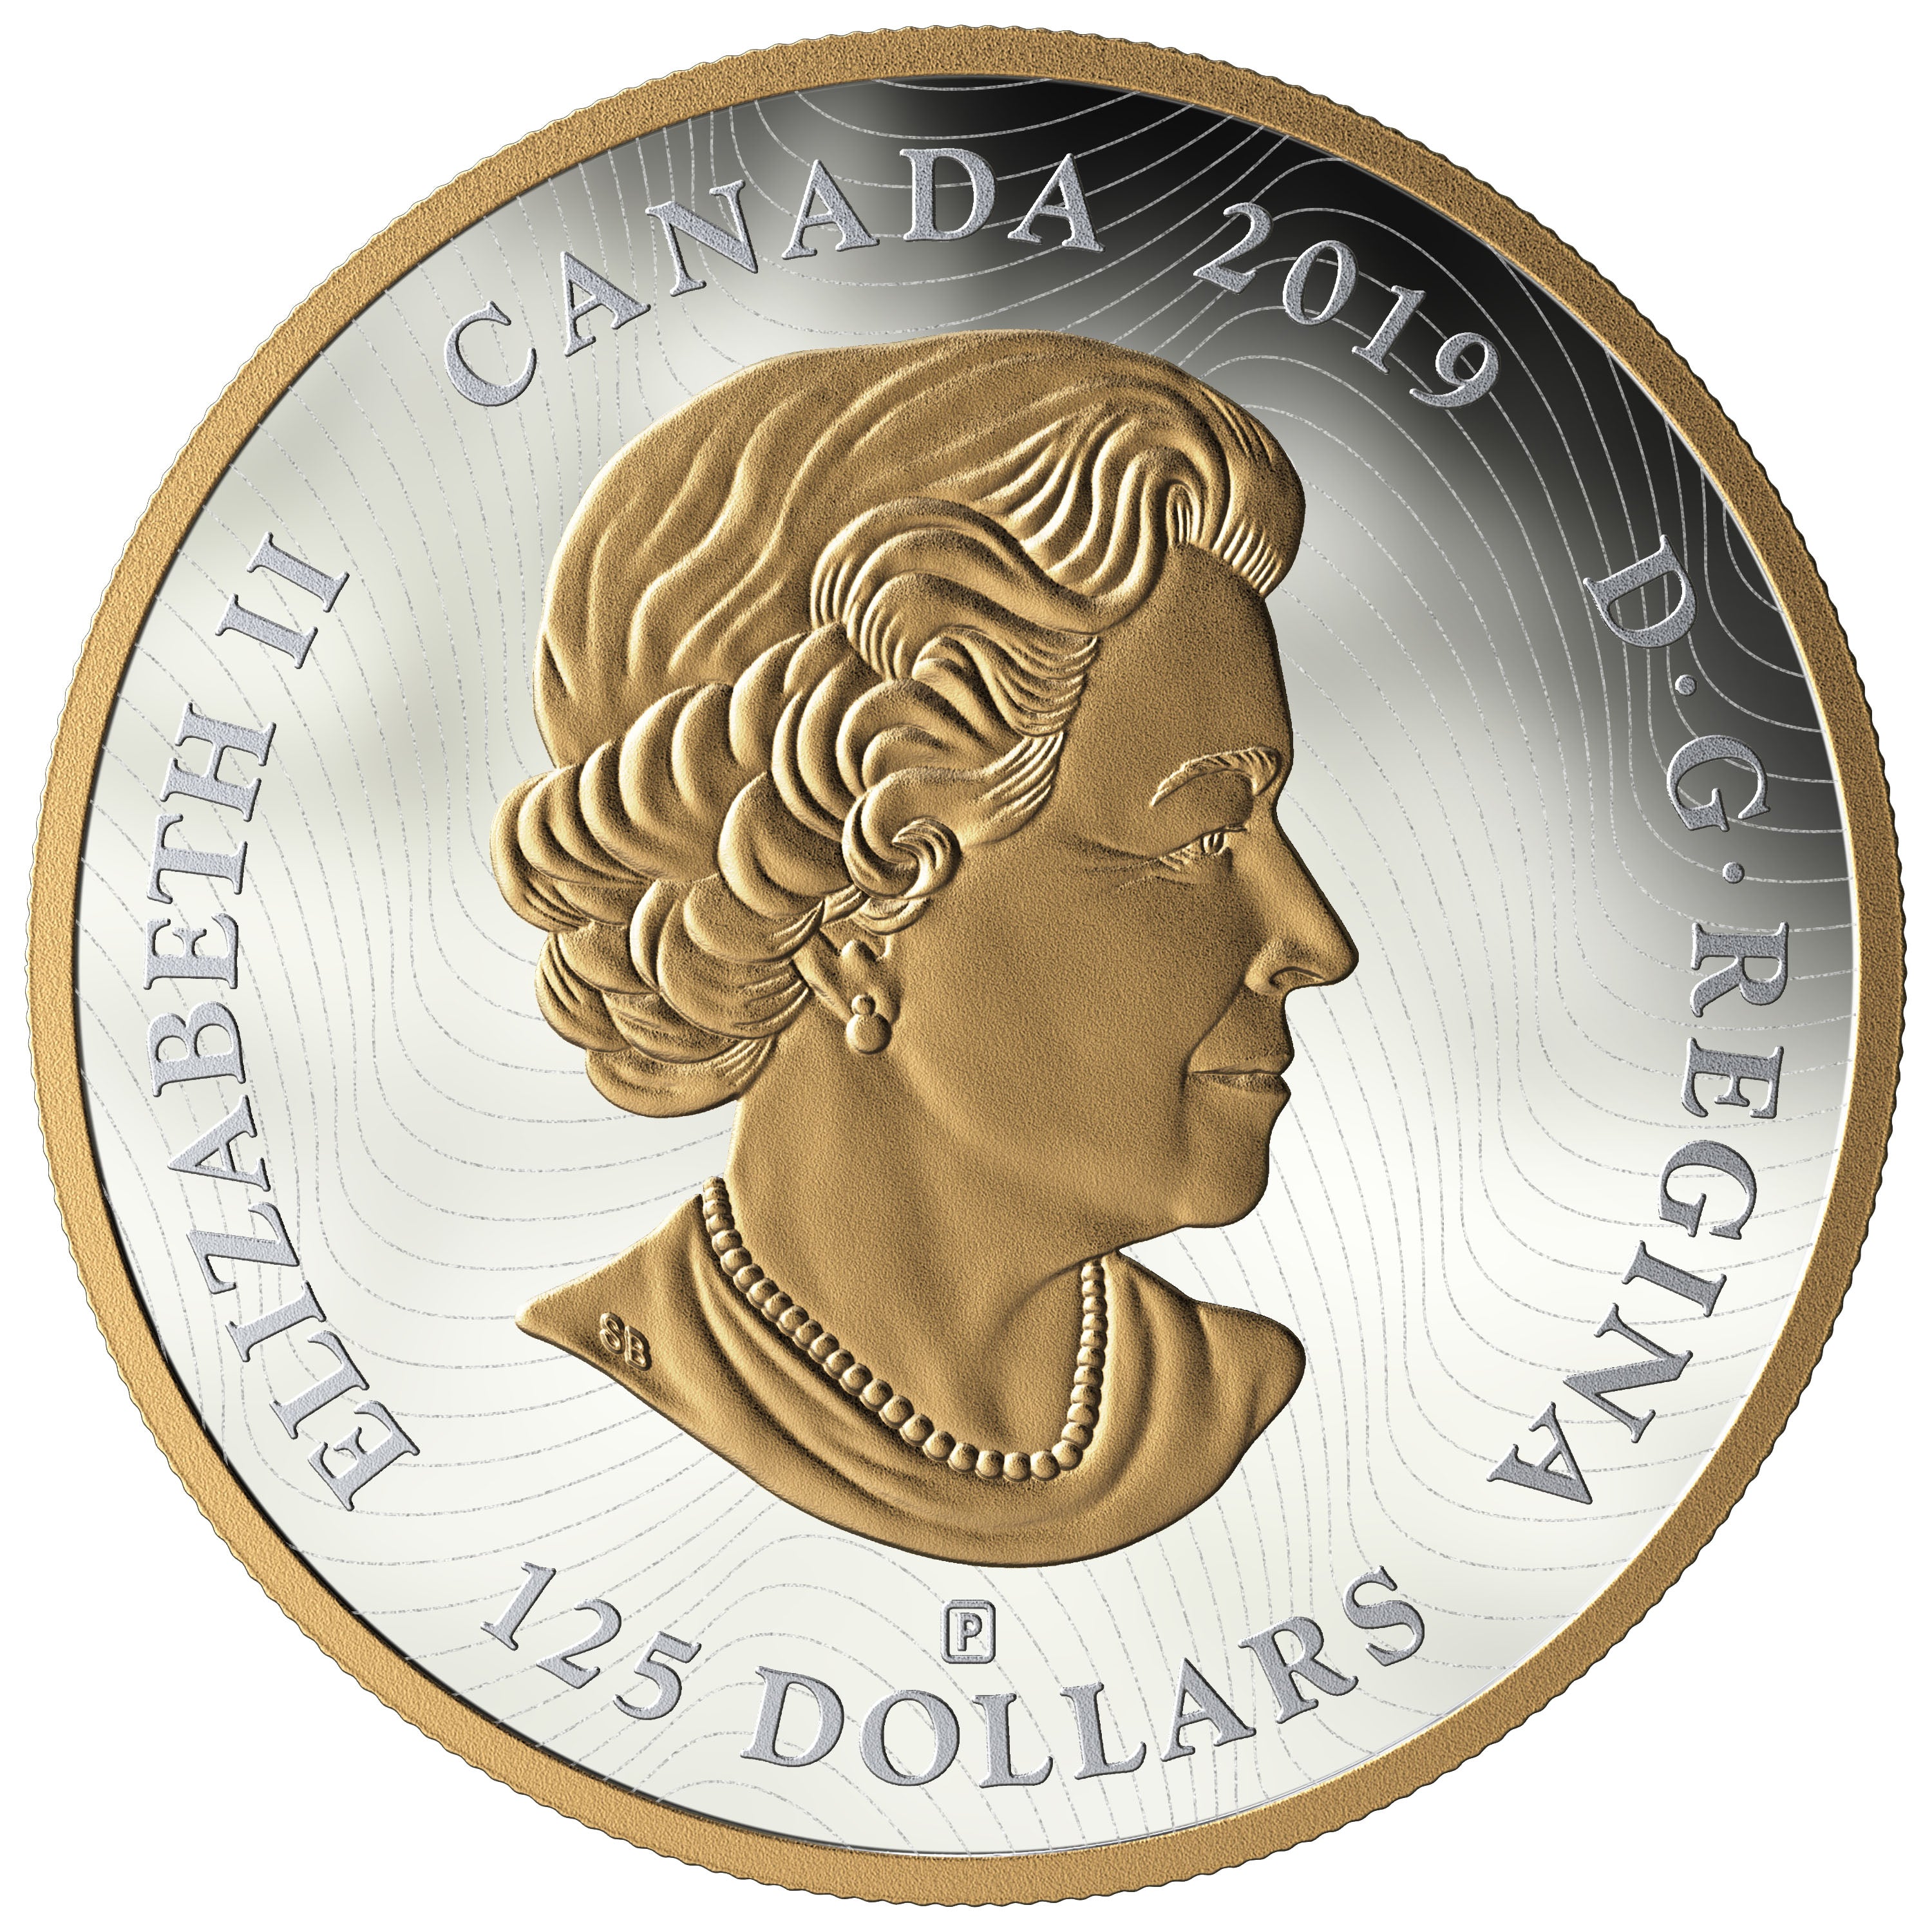 TALL SHIPS Compass Gold Plating 1/2 Kilo Silver Coin $125 Canada 2019